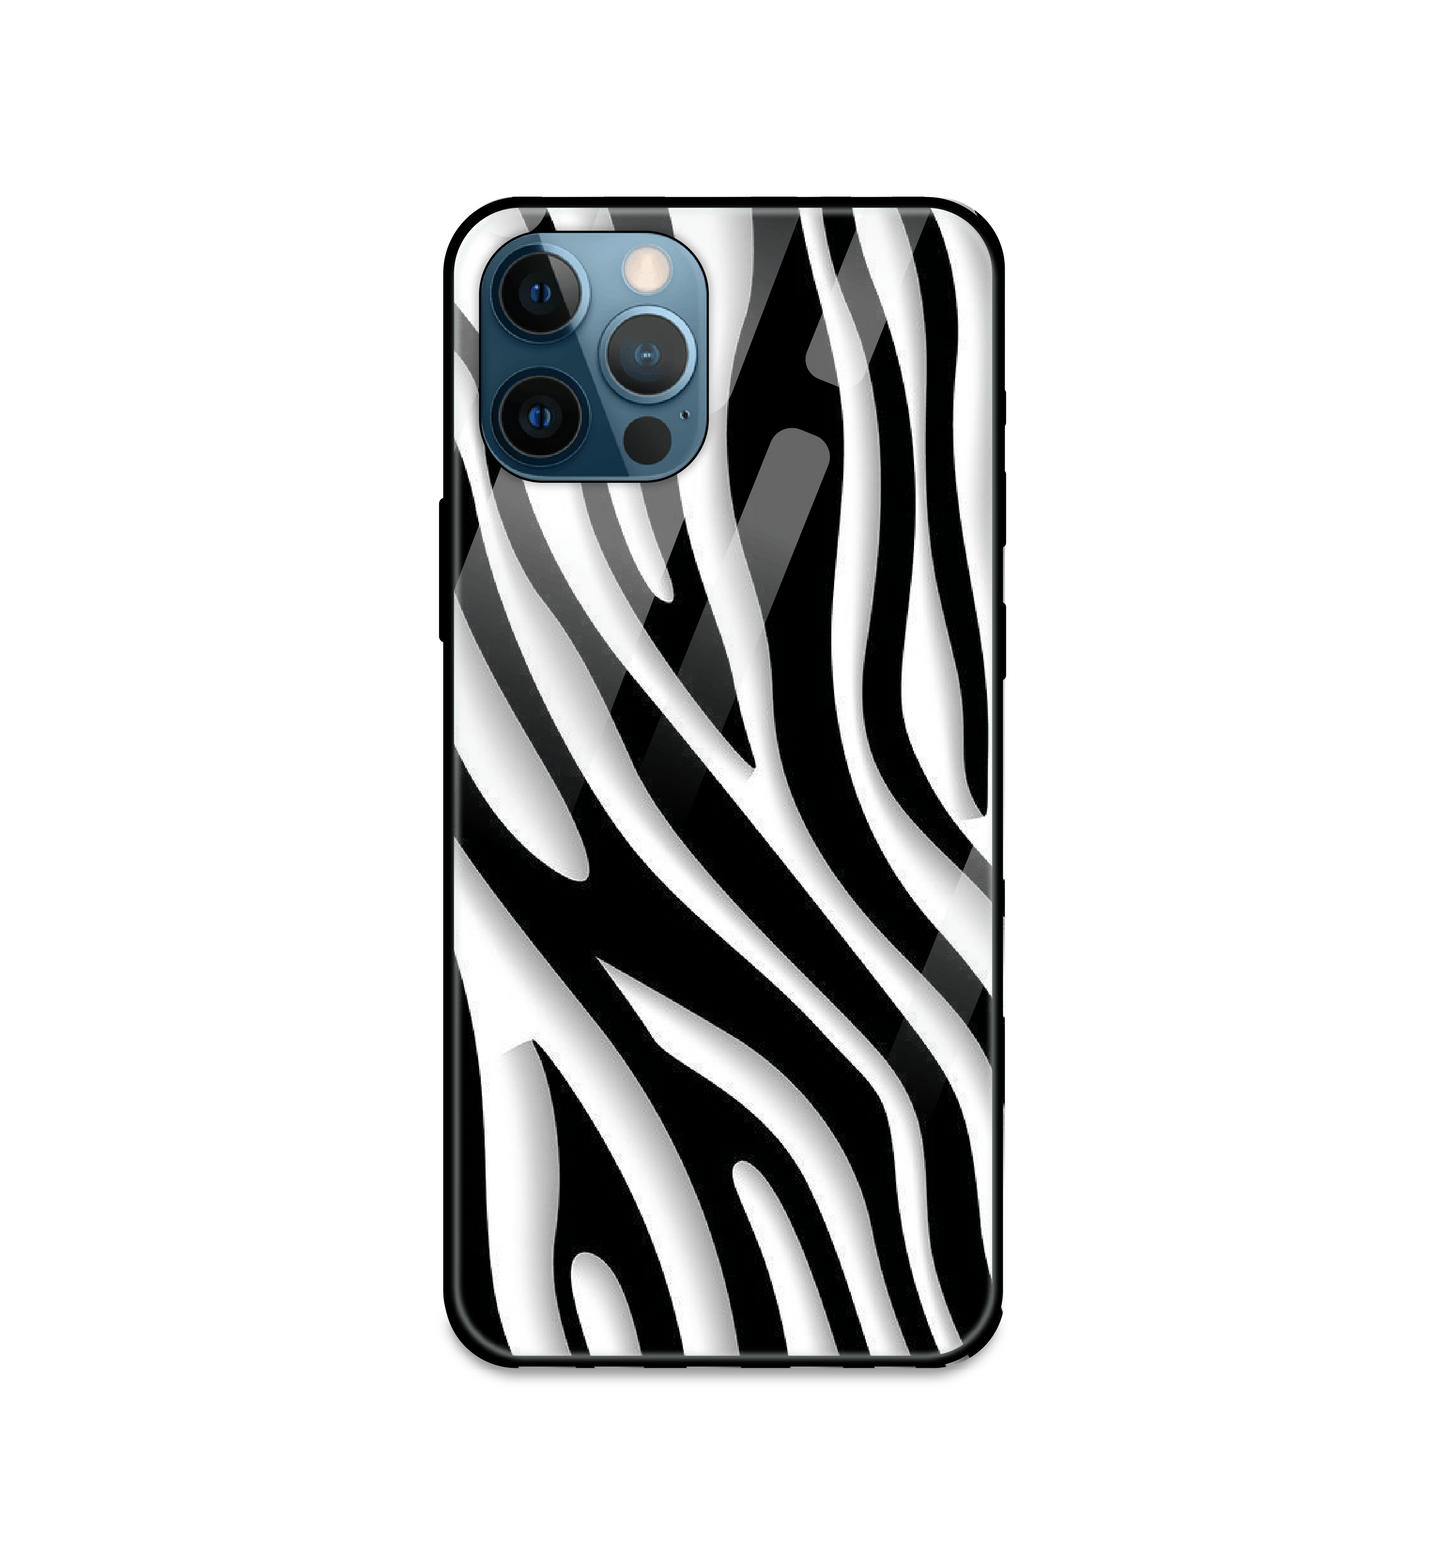 Zebra Print - Glass Cases For iPhone Models